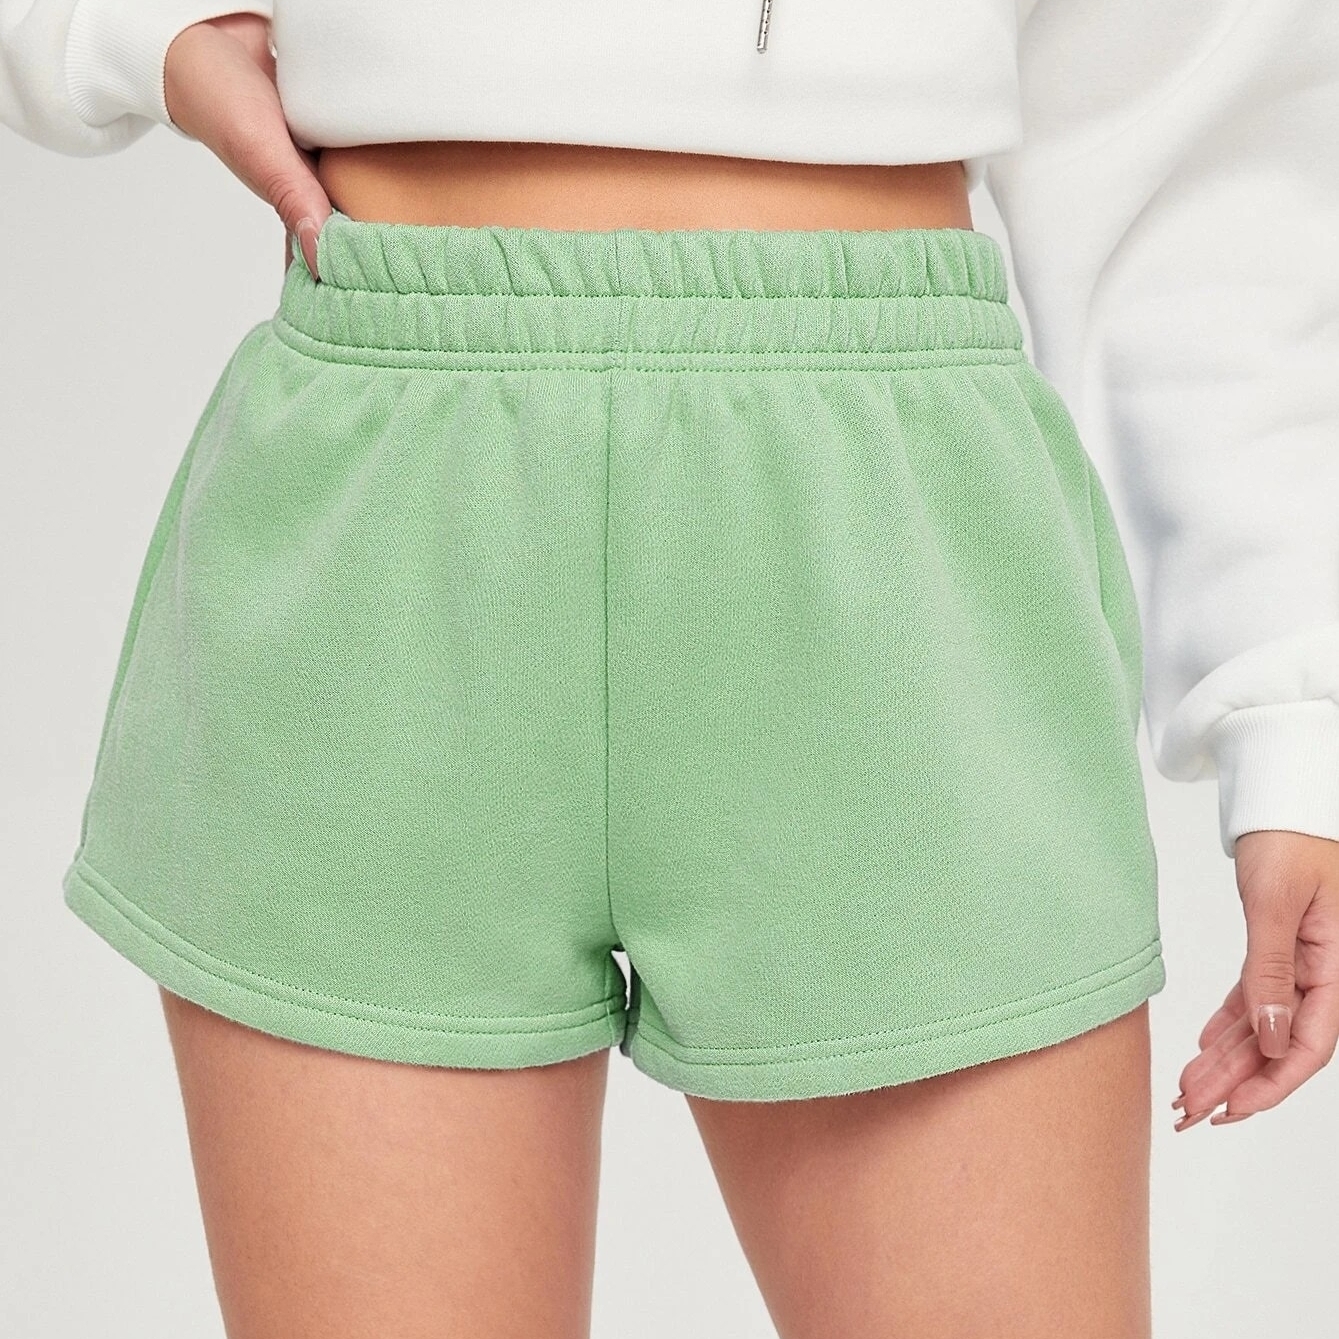 Elastic Waist Sweat Shorts - Mint Green, L